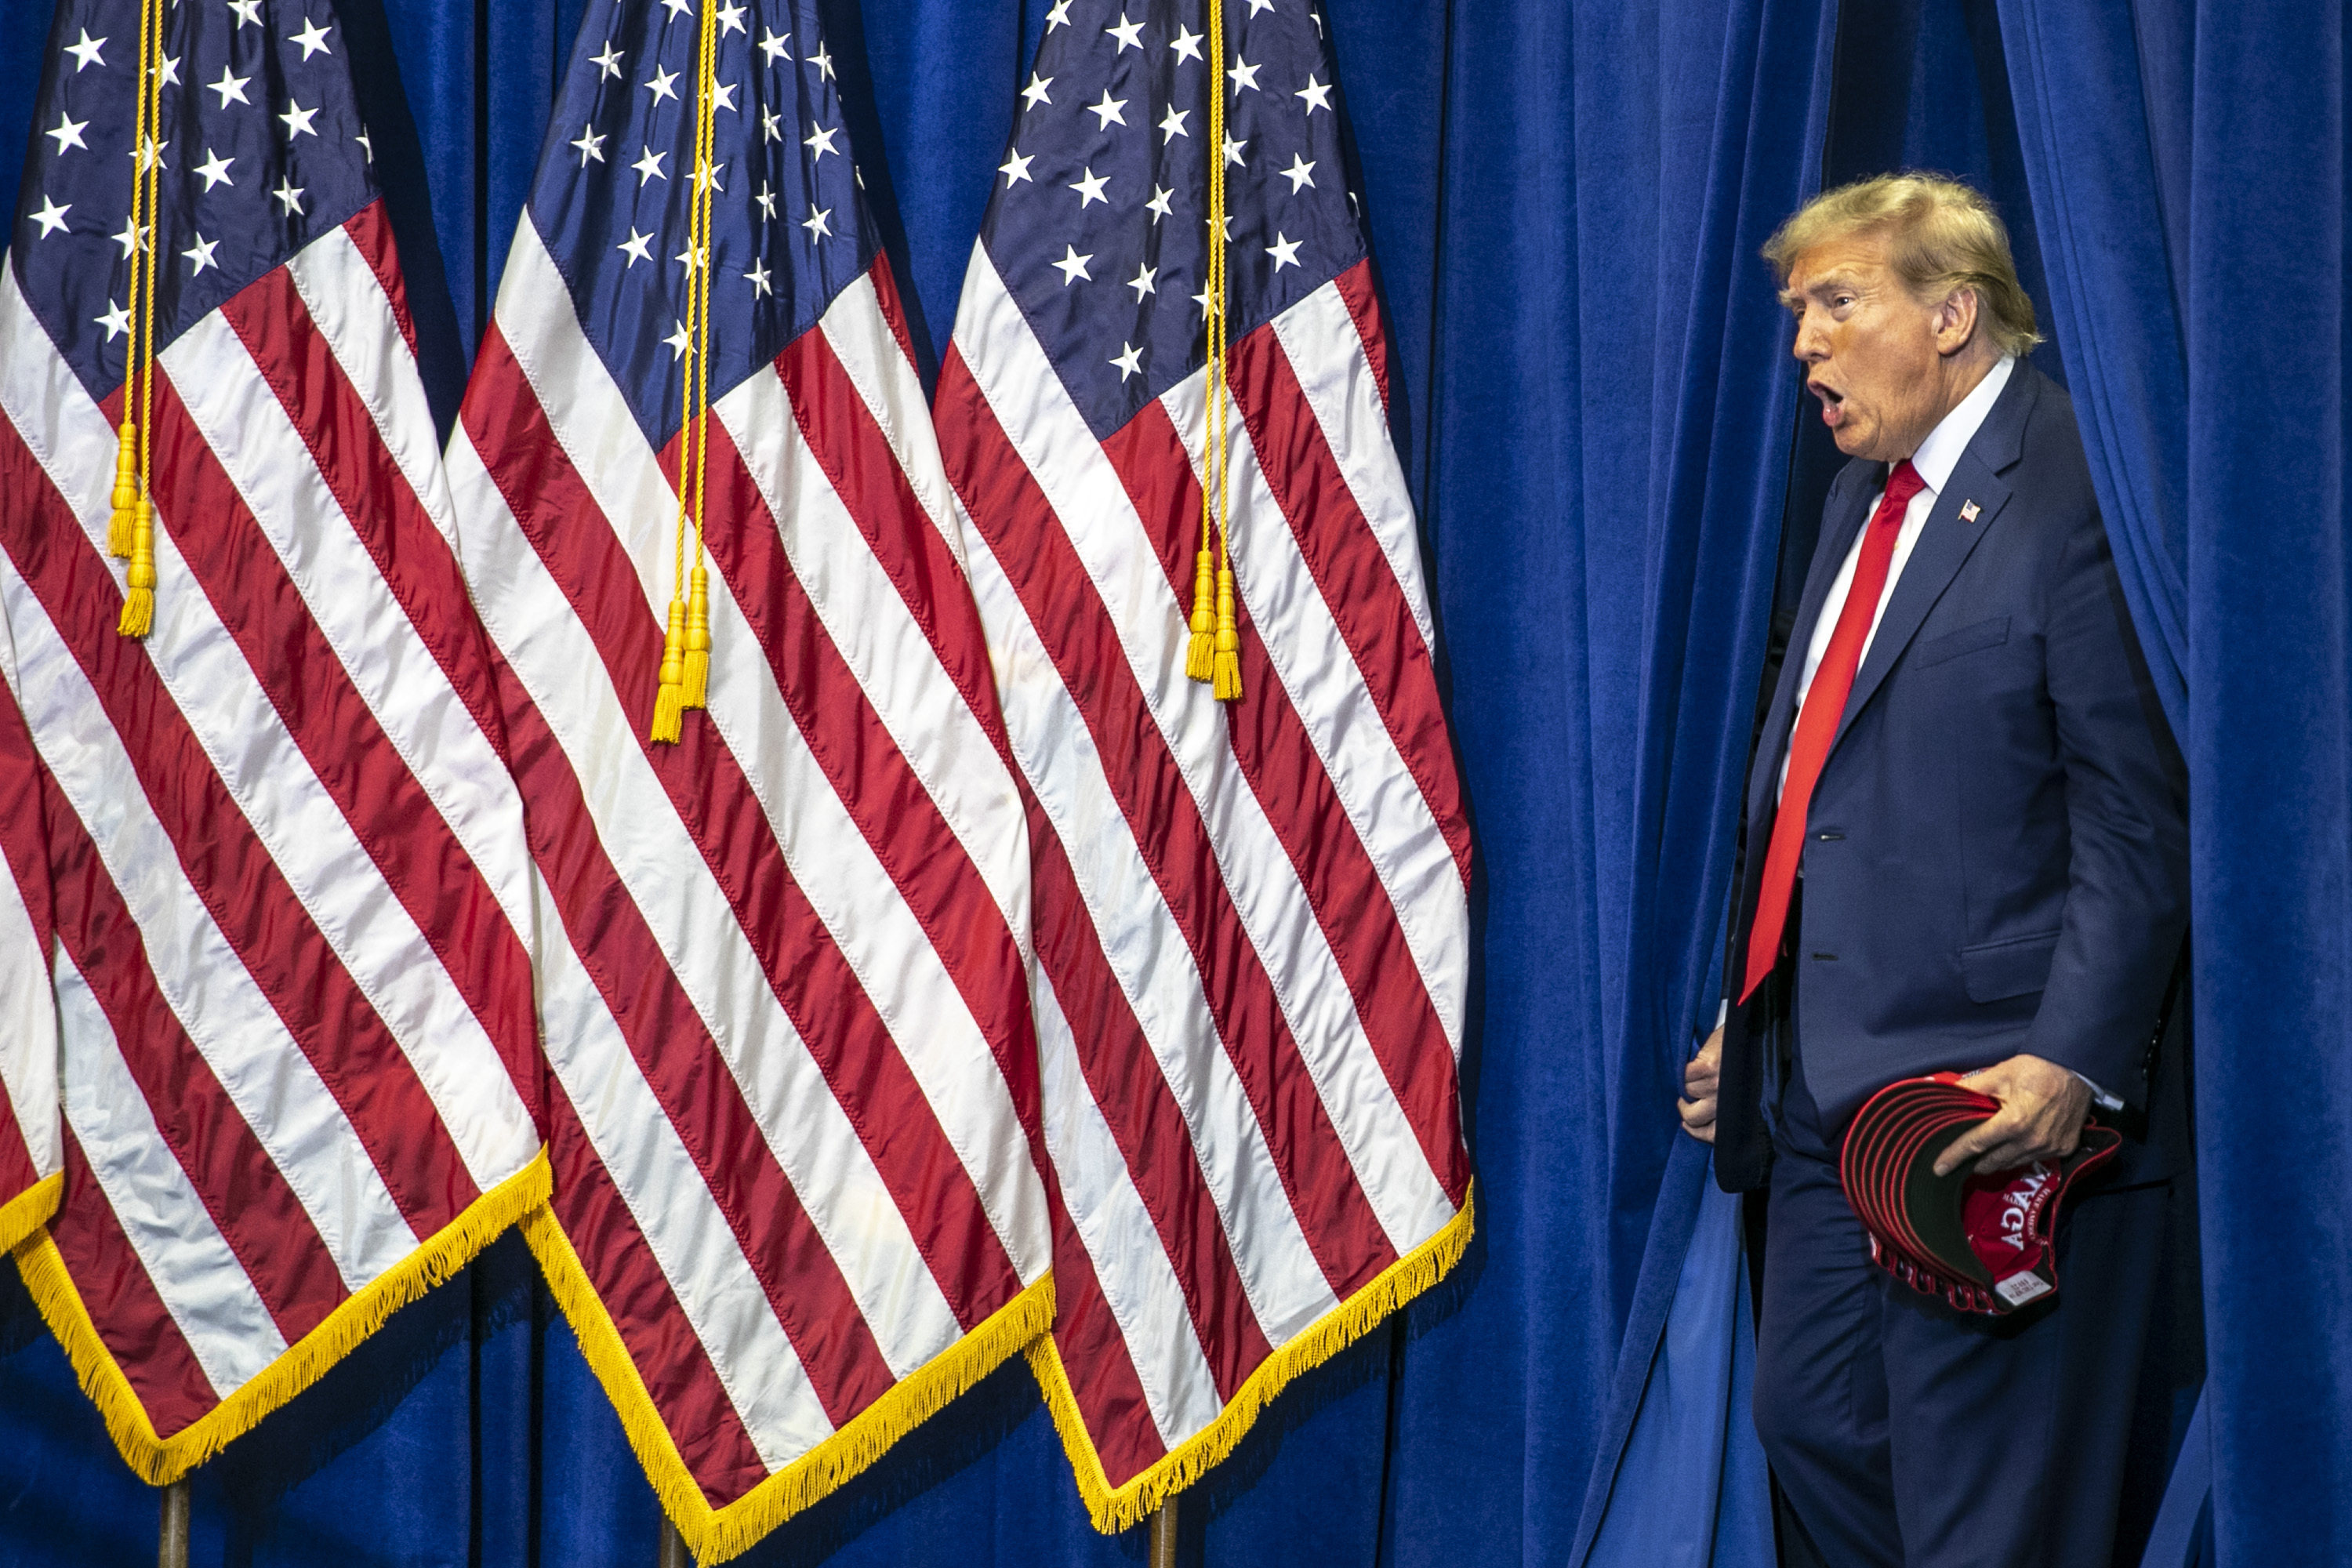 Donald Trump at a caucus event in Cedar Rapids, Iowa, US on Saturday. Photo: The Gazette via AP